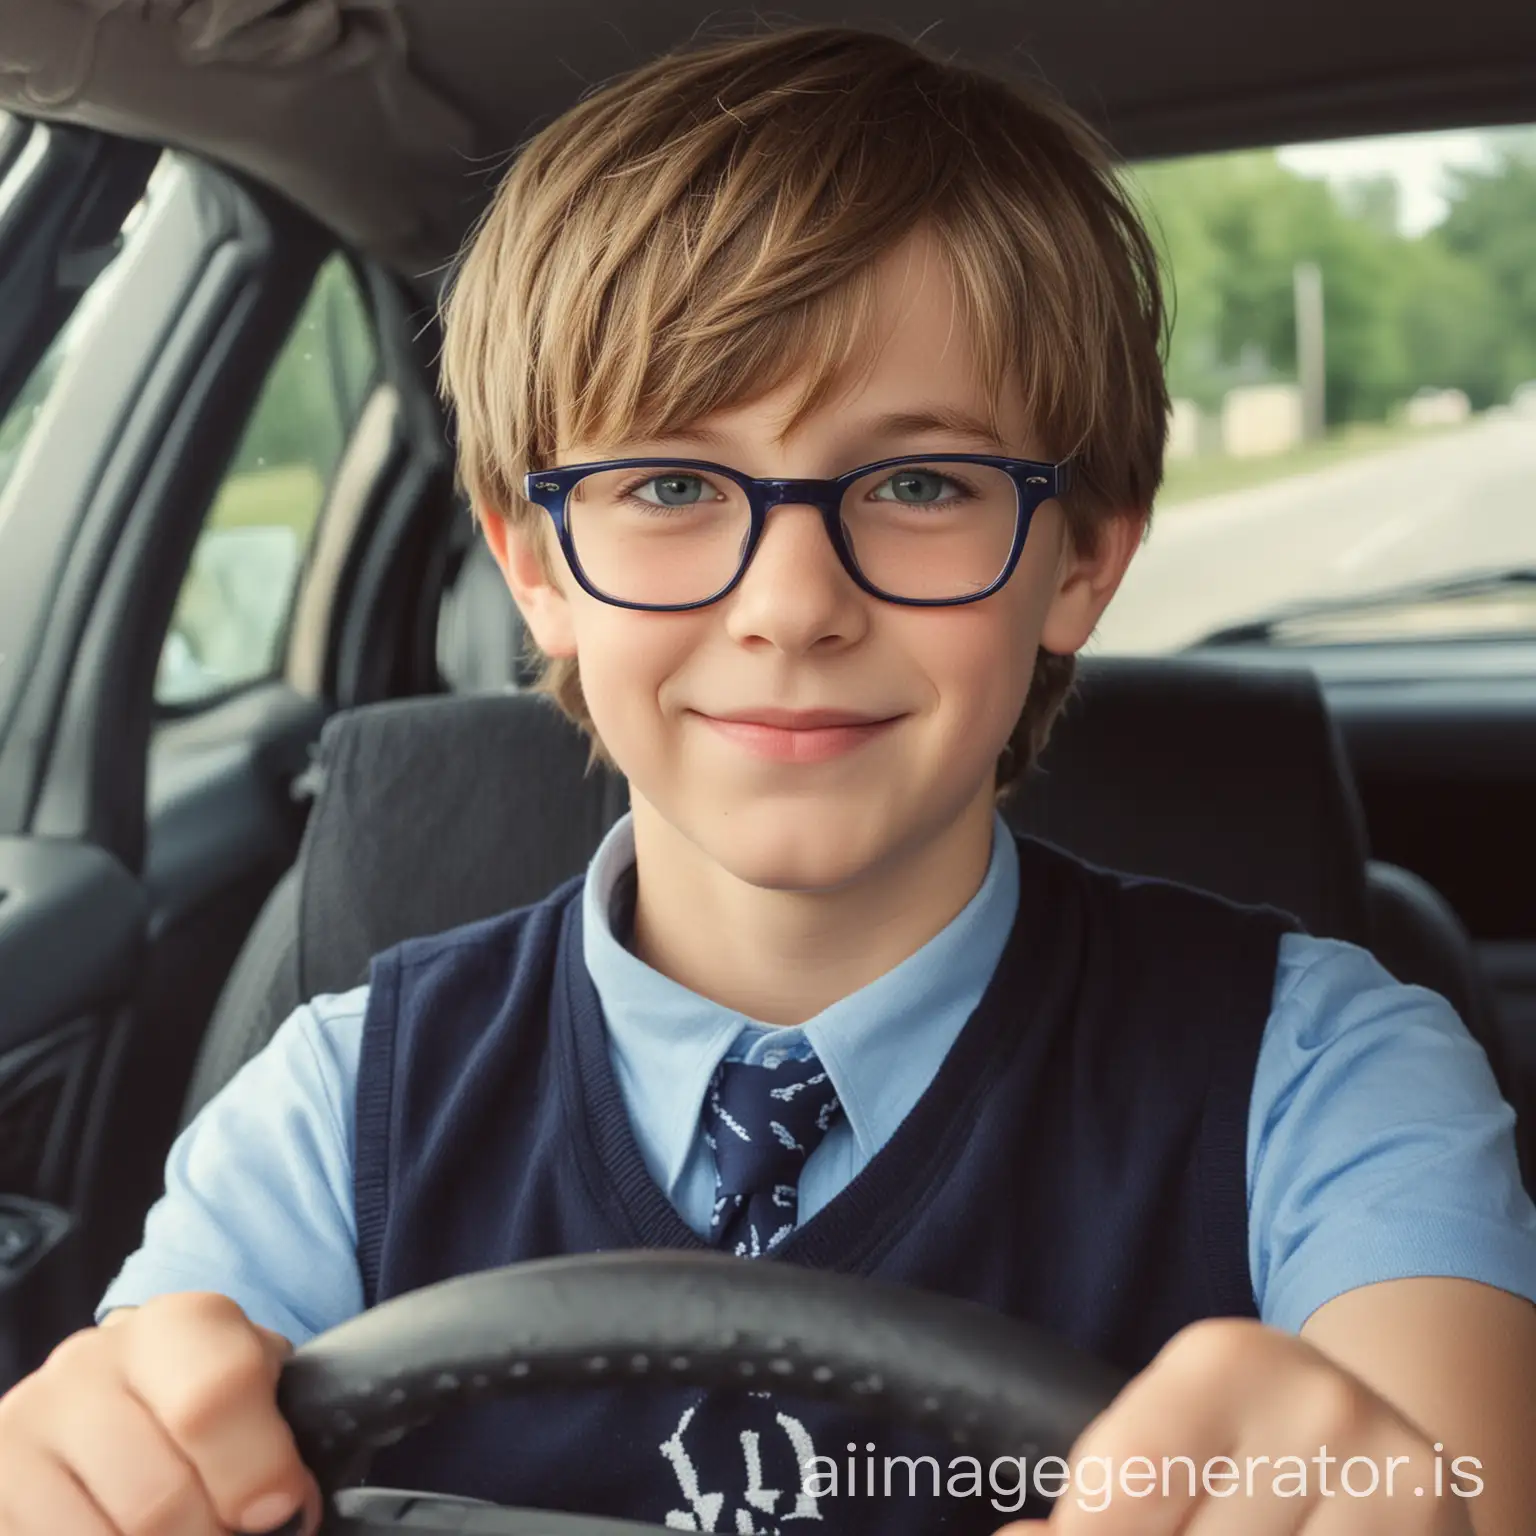 11 year old boy, wearing reading glasses, cute, fair skin, nerd, pale skin, dark blonde hair, very handsome, wearing blue singlet

Driving a manual car 